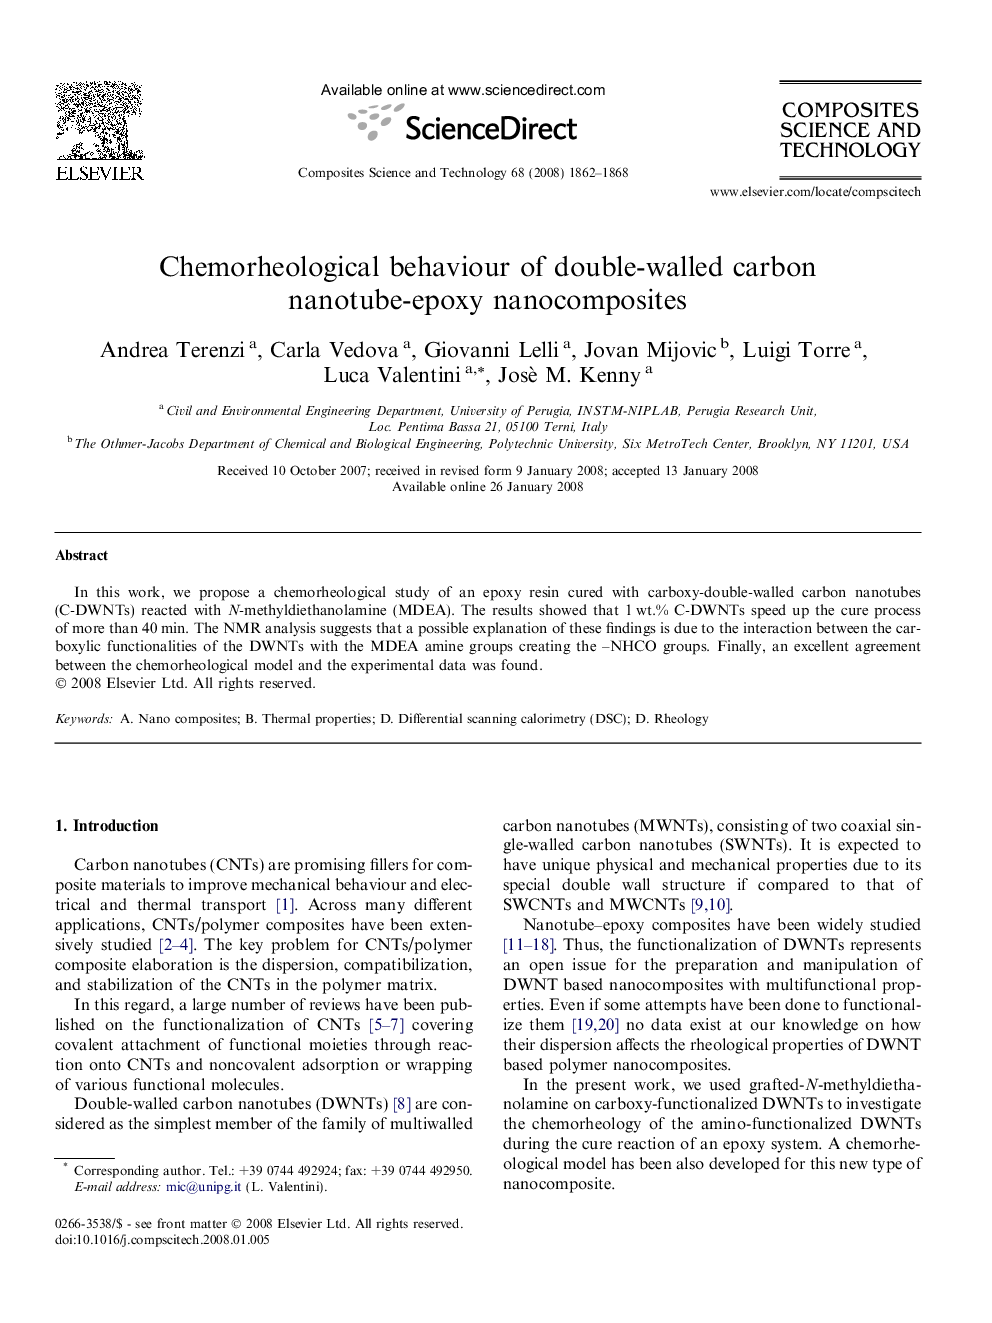 Chemorheological behaviour of double-walled carbon nanotube-epoxy nanocomposites